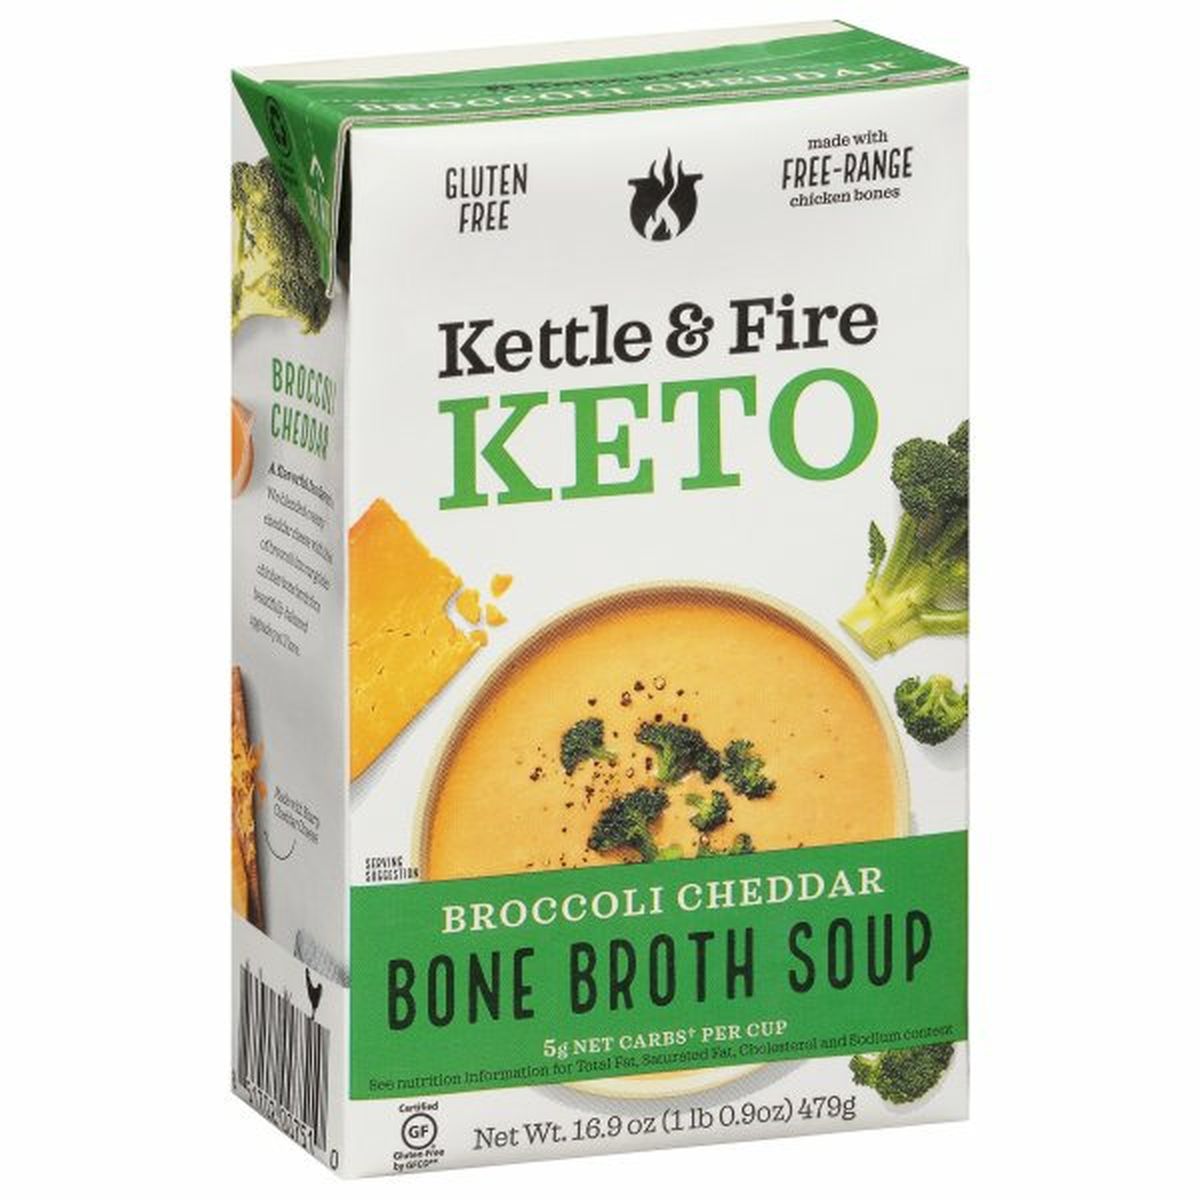 Calories in Kettle & Fire Keto Bone Broth Soup, Broccoli Cheddar